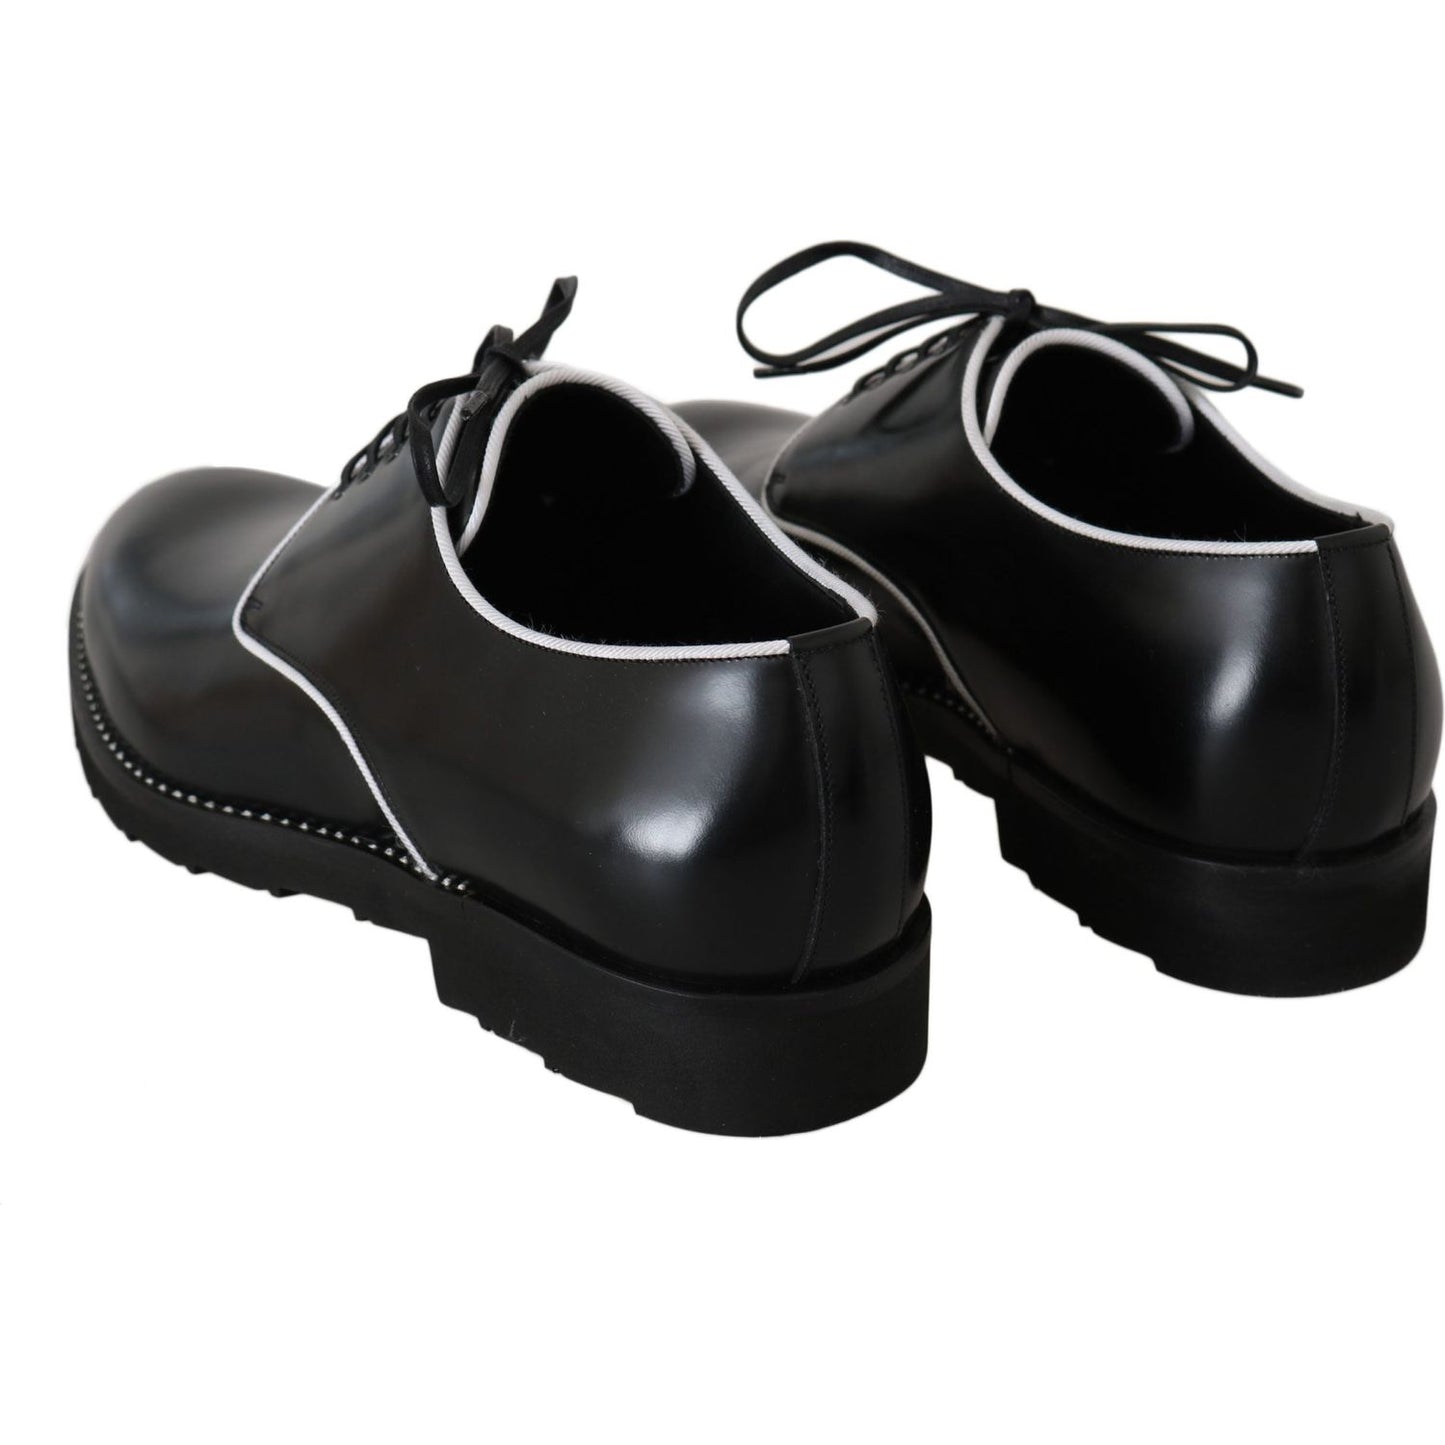 Dolce & Gabbana Elegant Black Leather Derby Dress Shoes black-leather-white-line-dress-derby-shoes